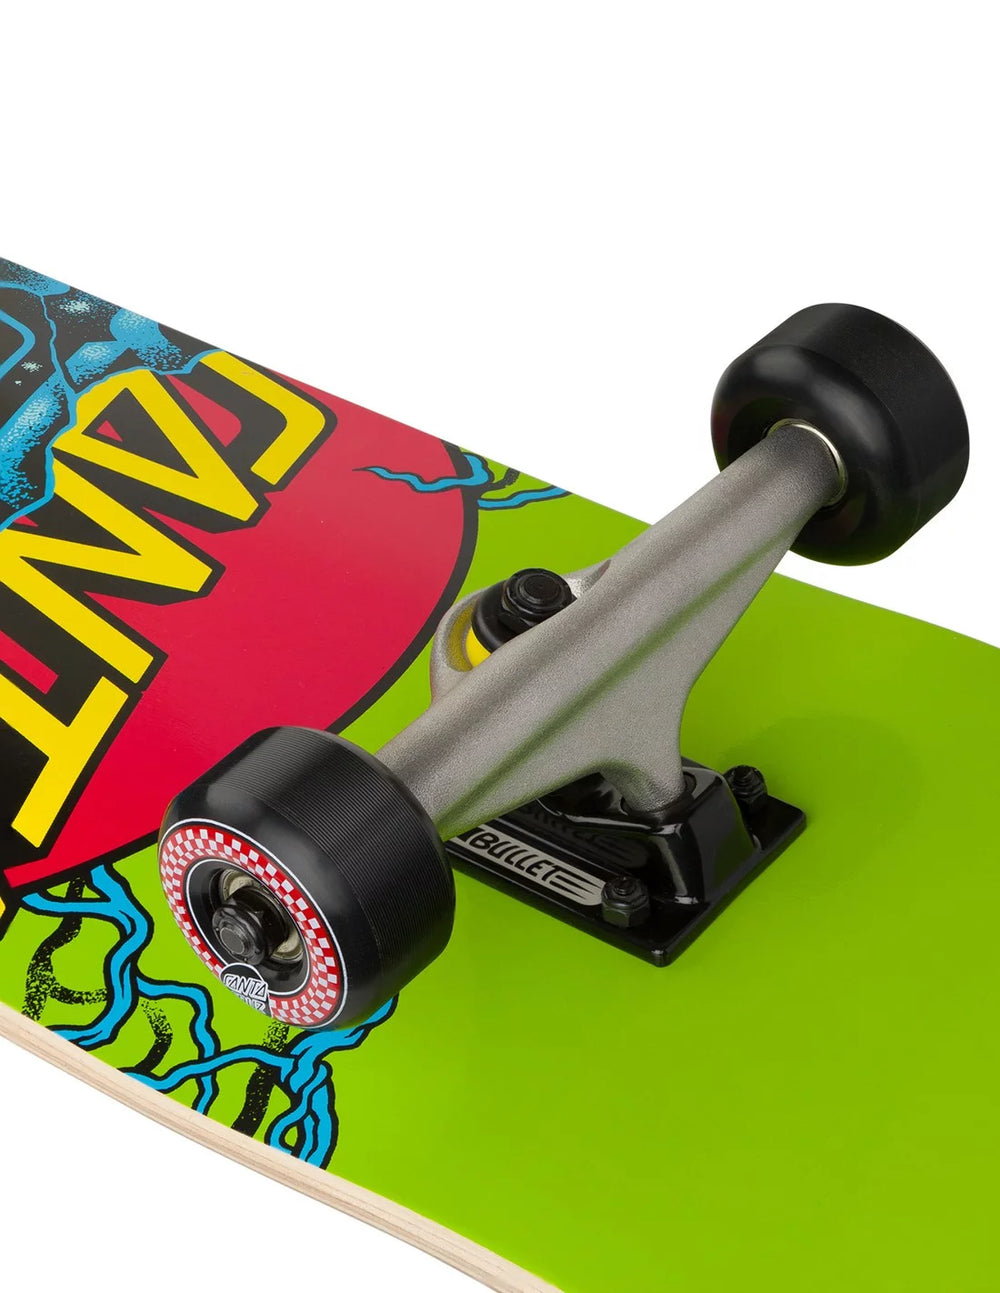 SANTA CRUZ x STRANGER THINGS Punto classico 8,25" - Skateboard completo